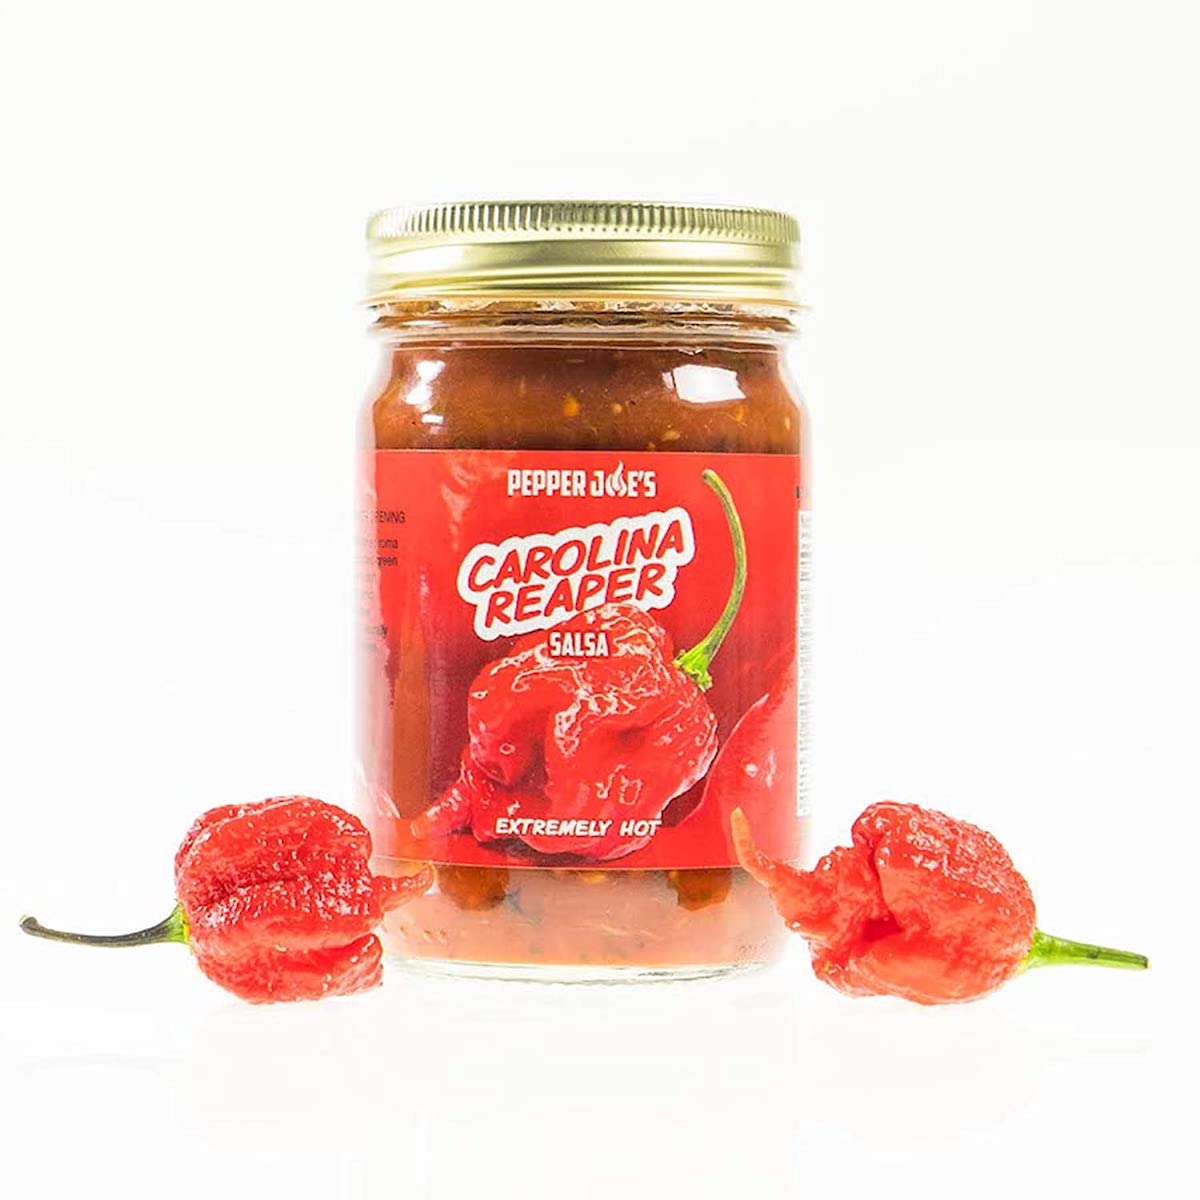 Pepper Joe's spicy Carolina Reaper salsa with carolina reaper peppers around jar on white background